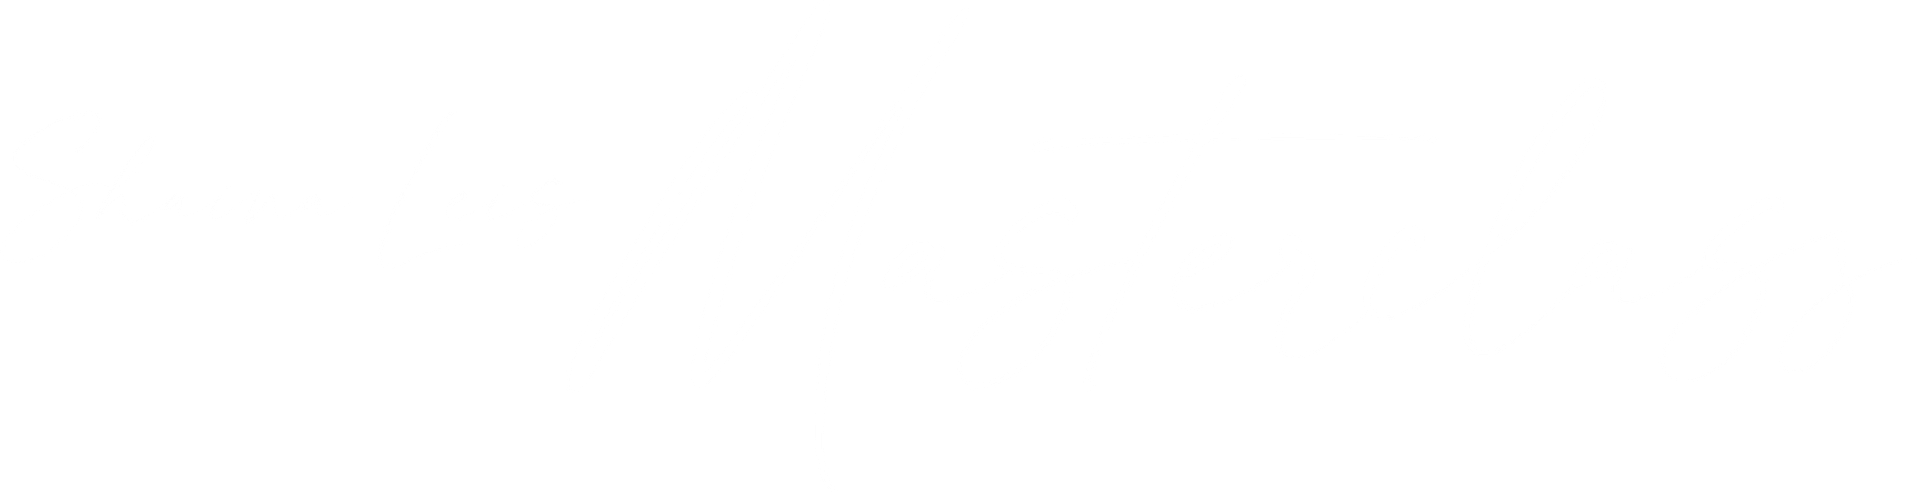 Shaina Leis Masterclass Logo